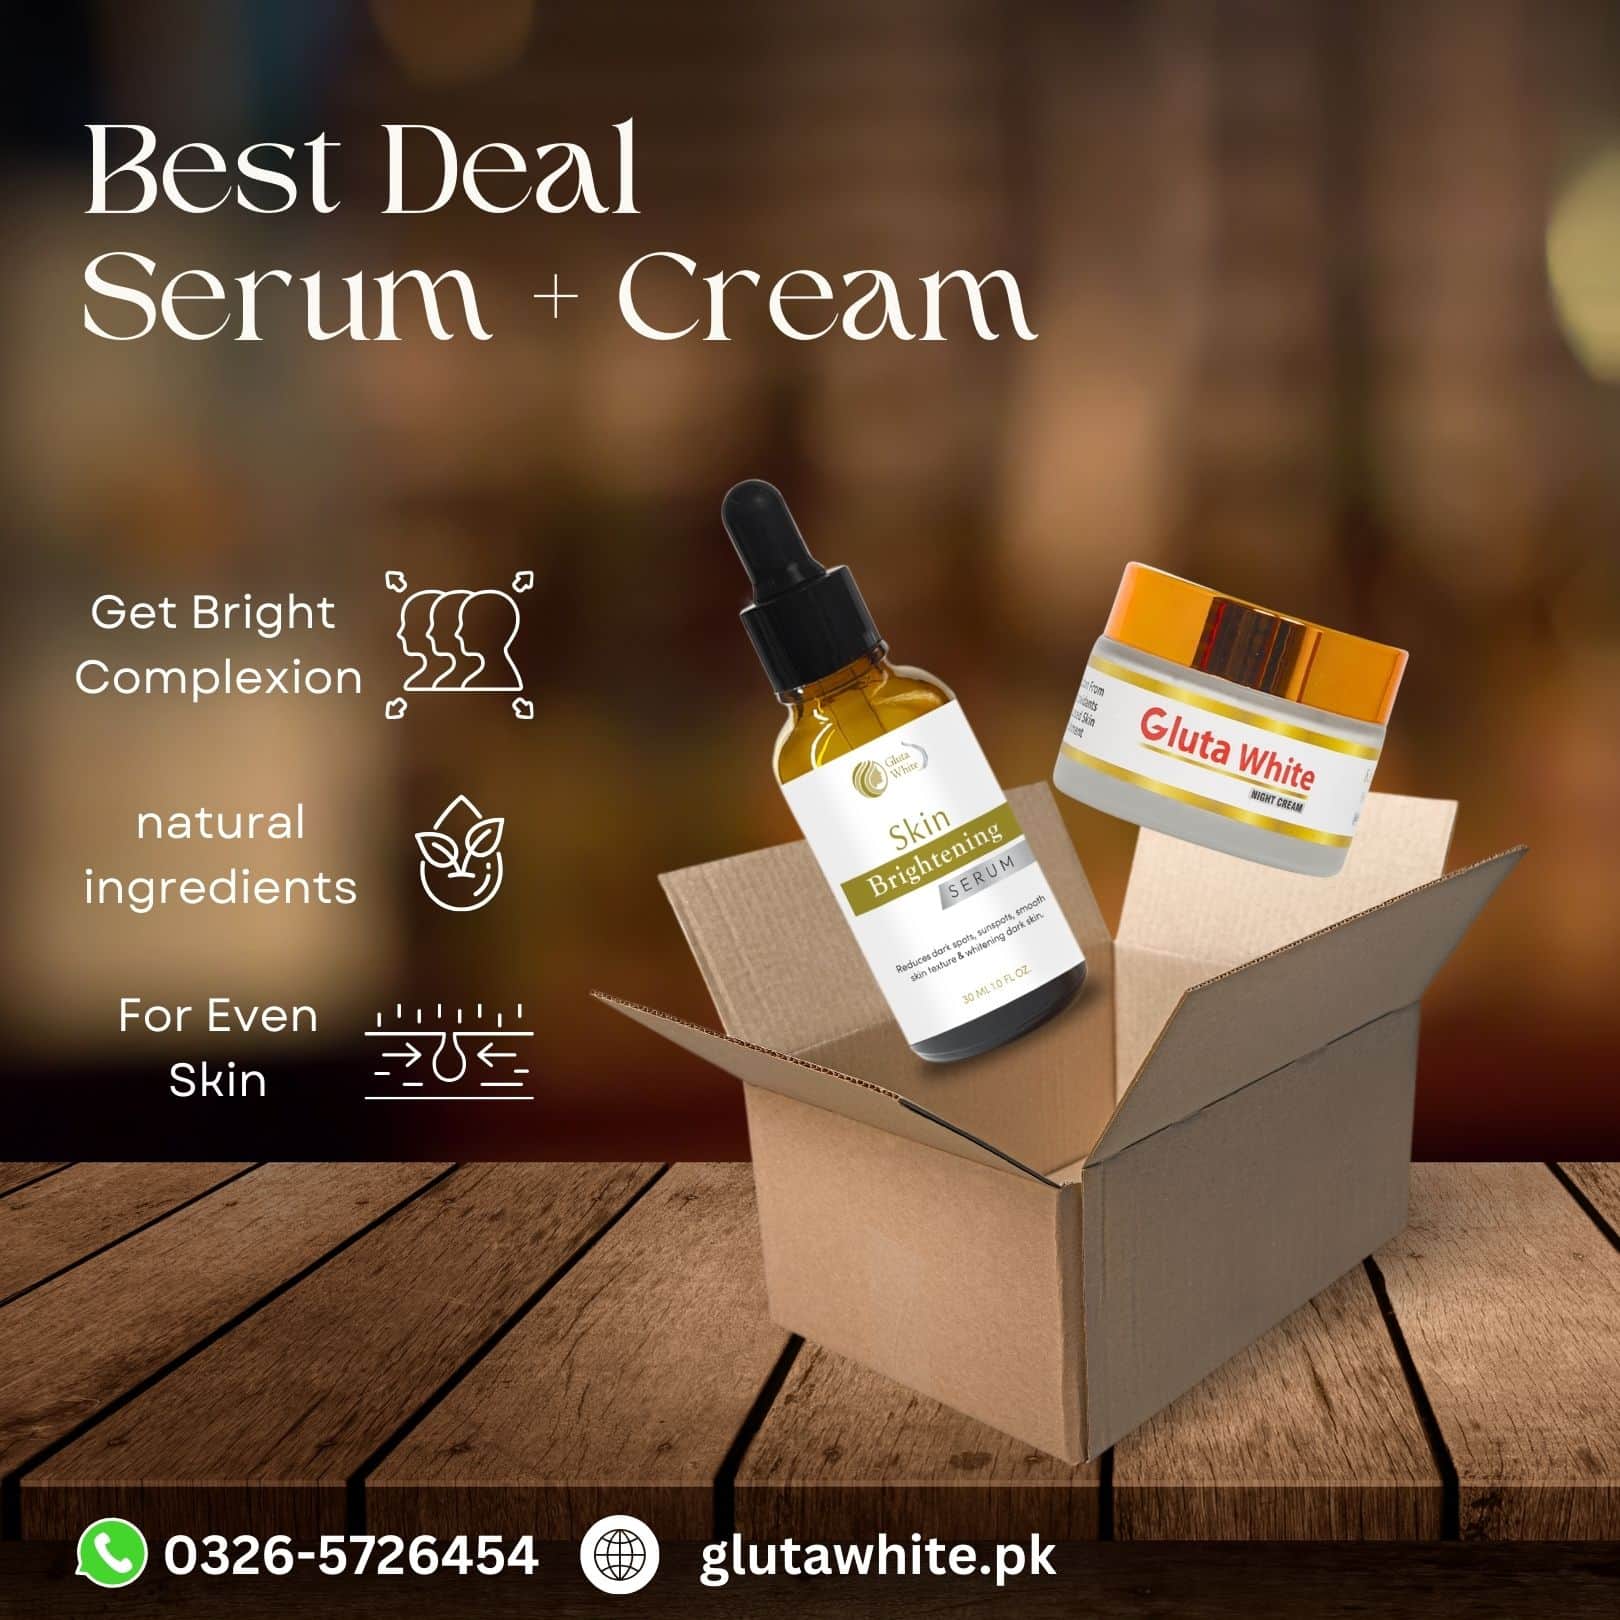 gluta white cream and serum